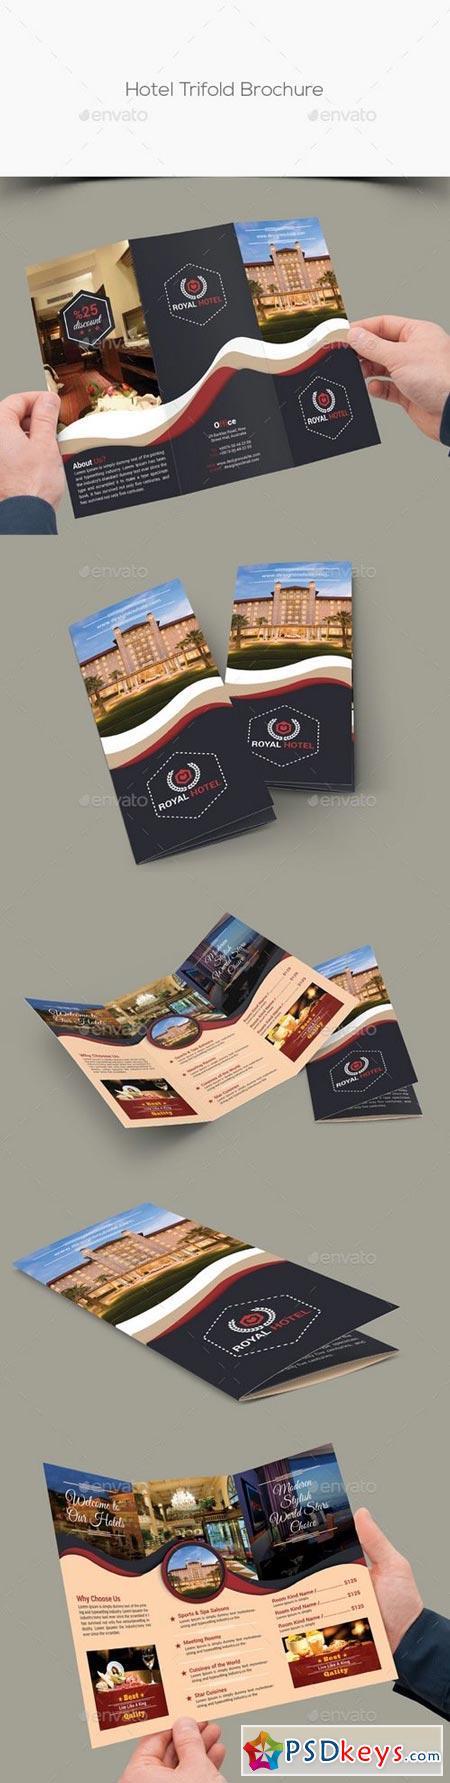 Hotel Trifold Brochure 15515898